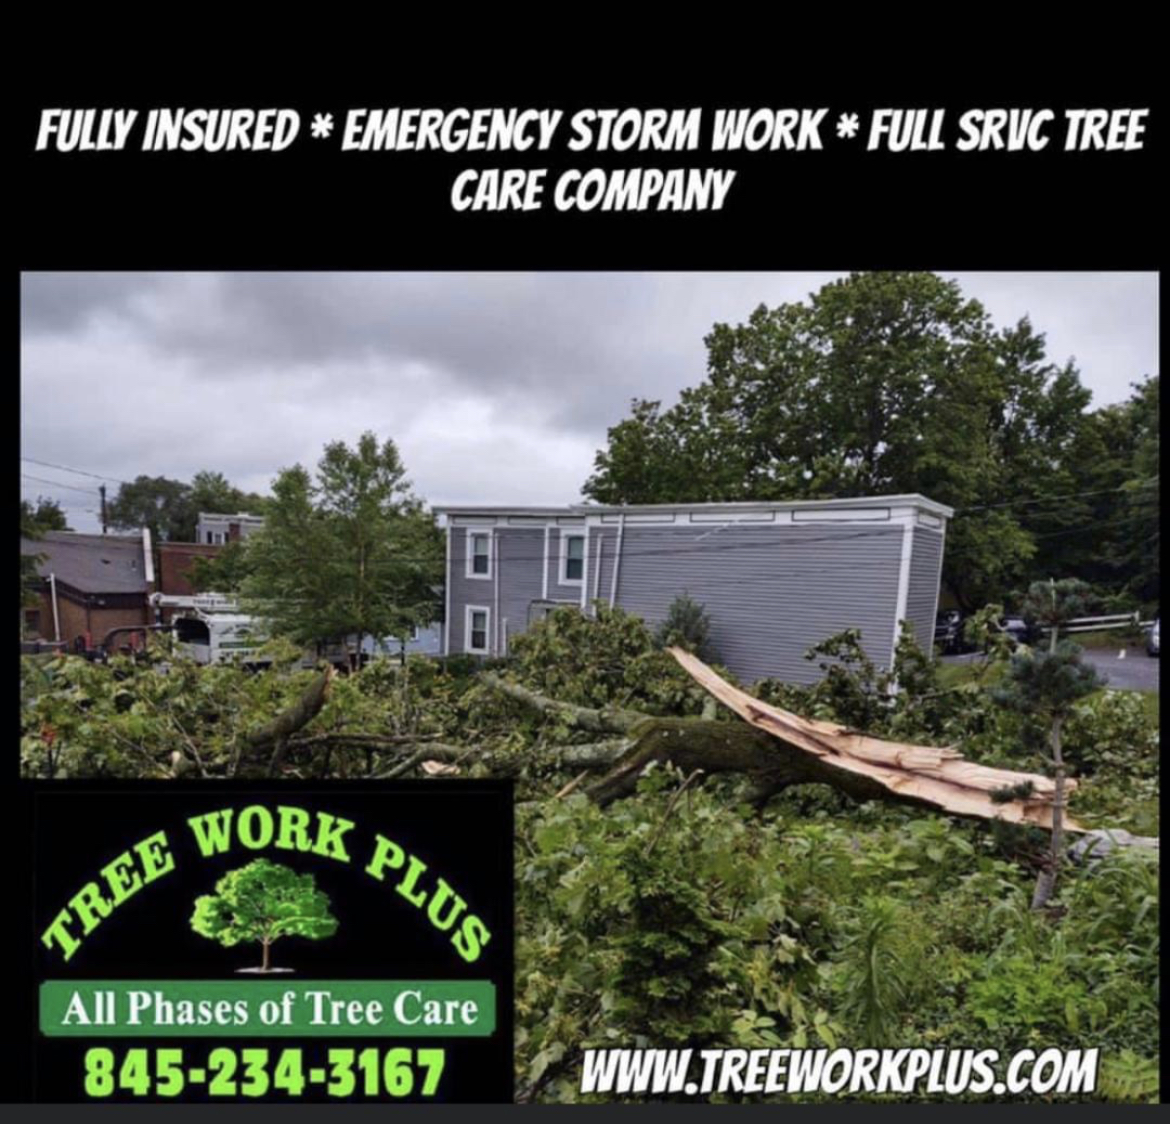 Tree Work Plus 1413 Albany Post Road, Gardiner New York 12525